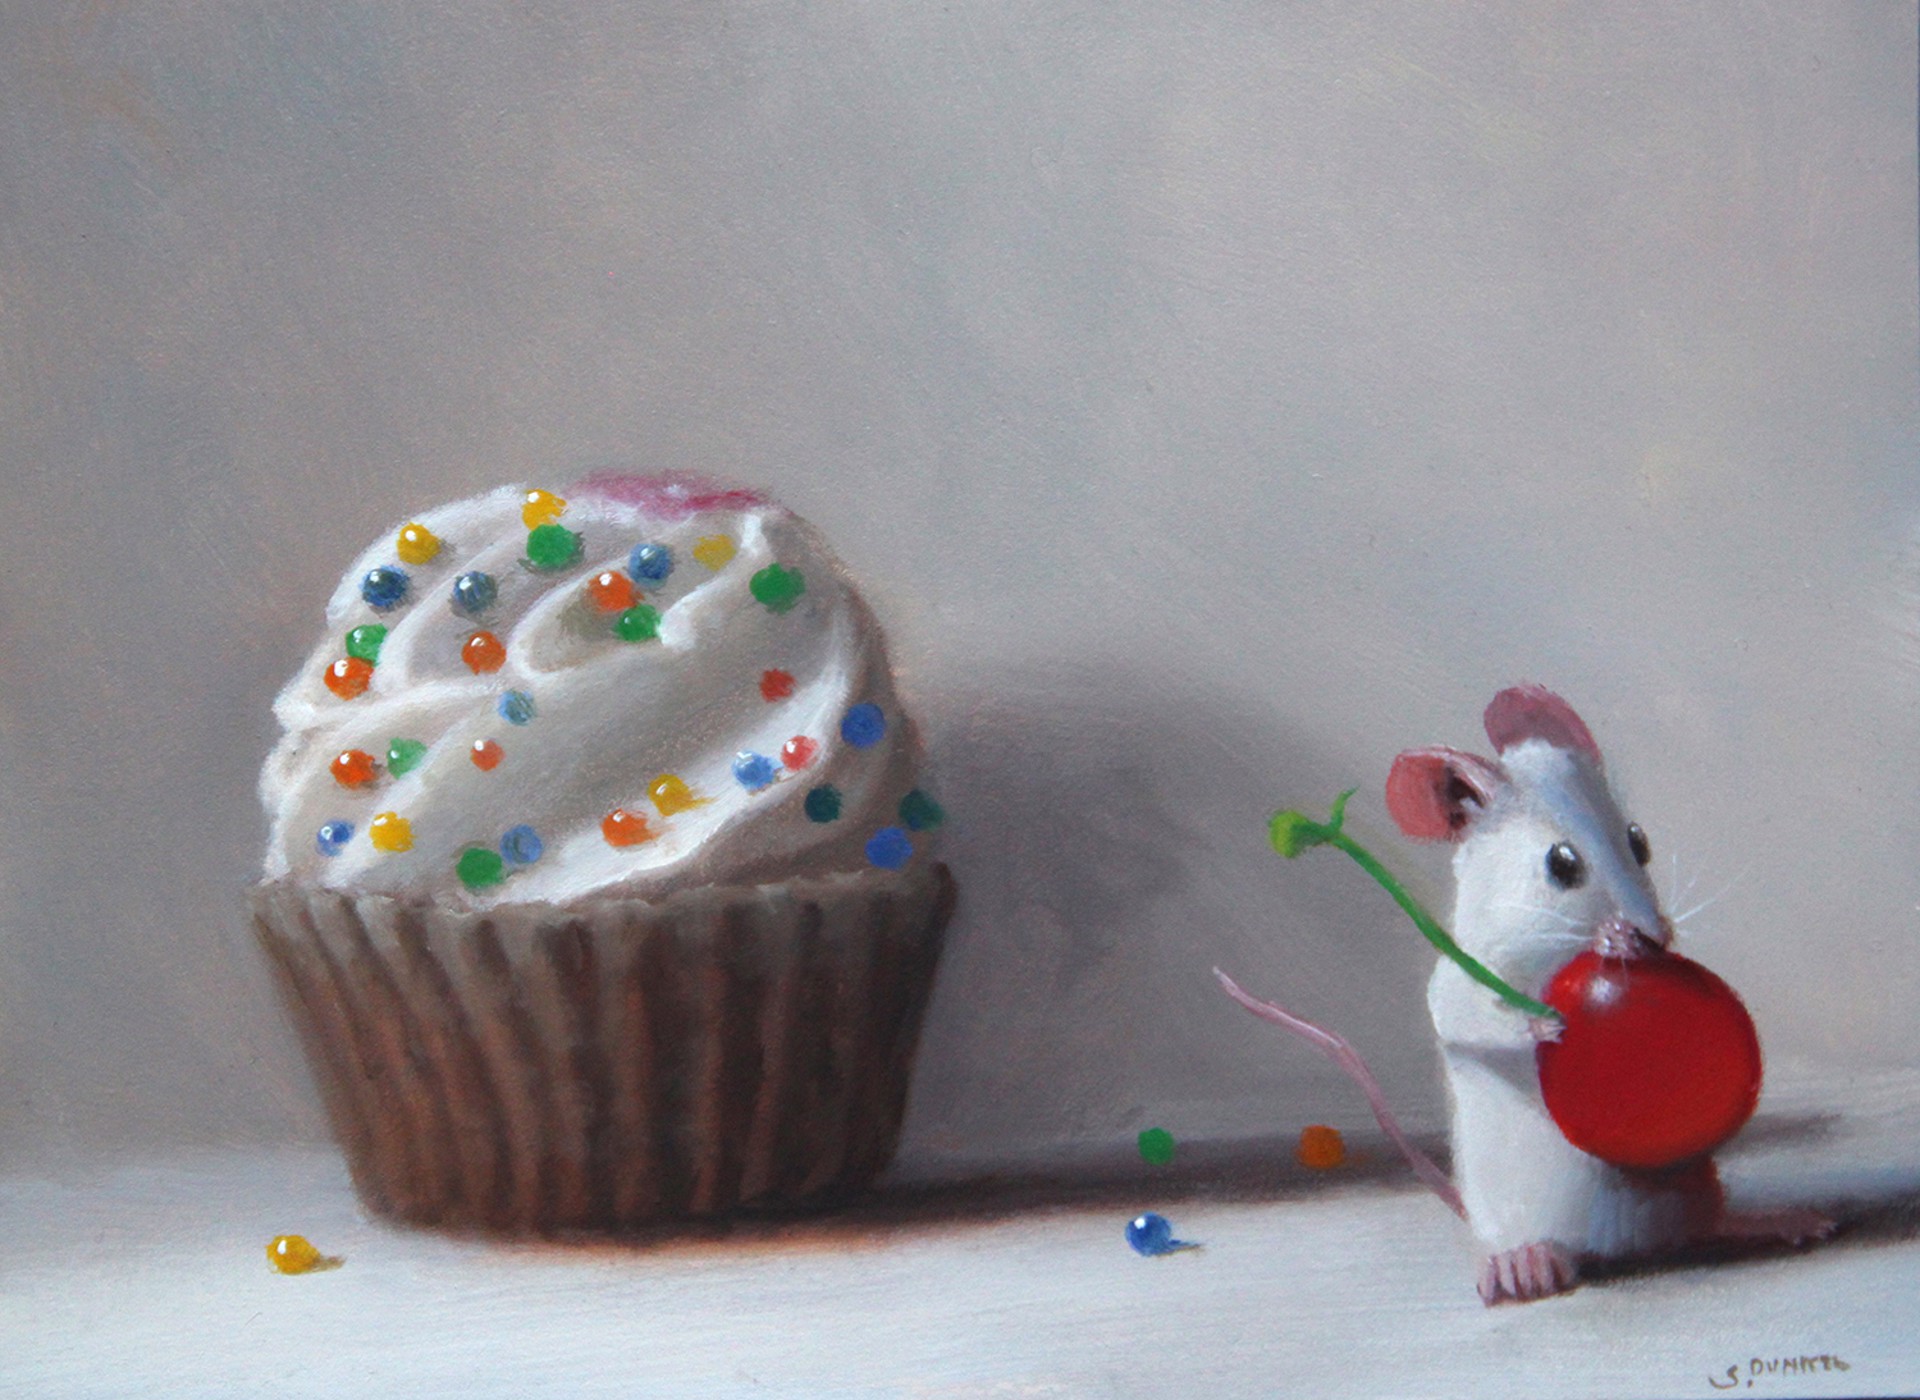 Cupcake Joy by Stuart Dunkel